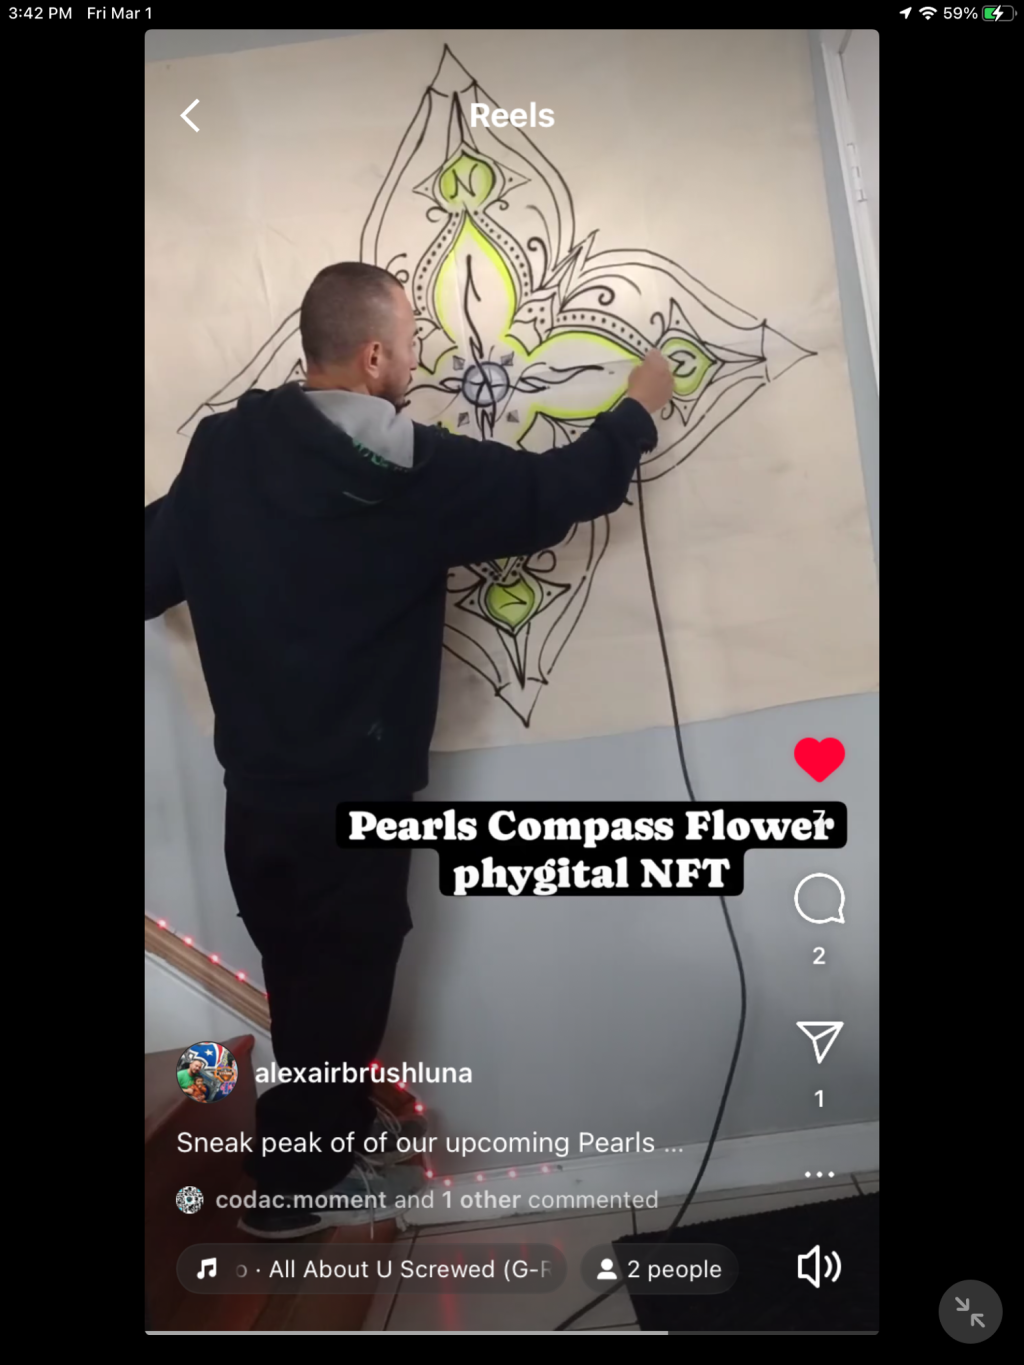 New Pearls Compass Flower NFT